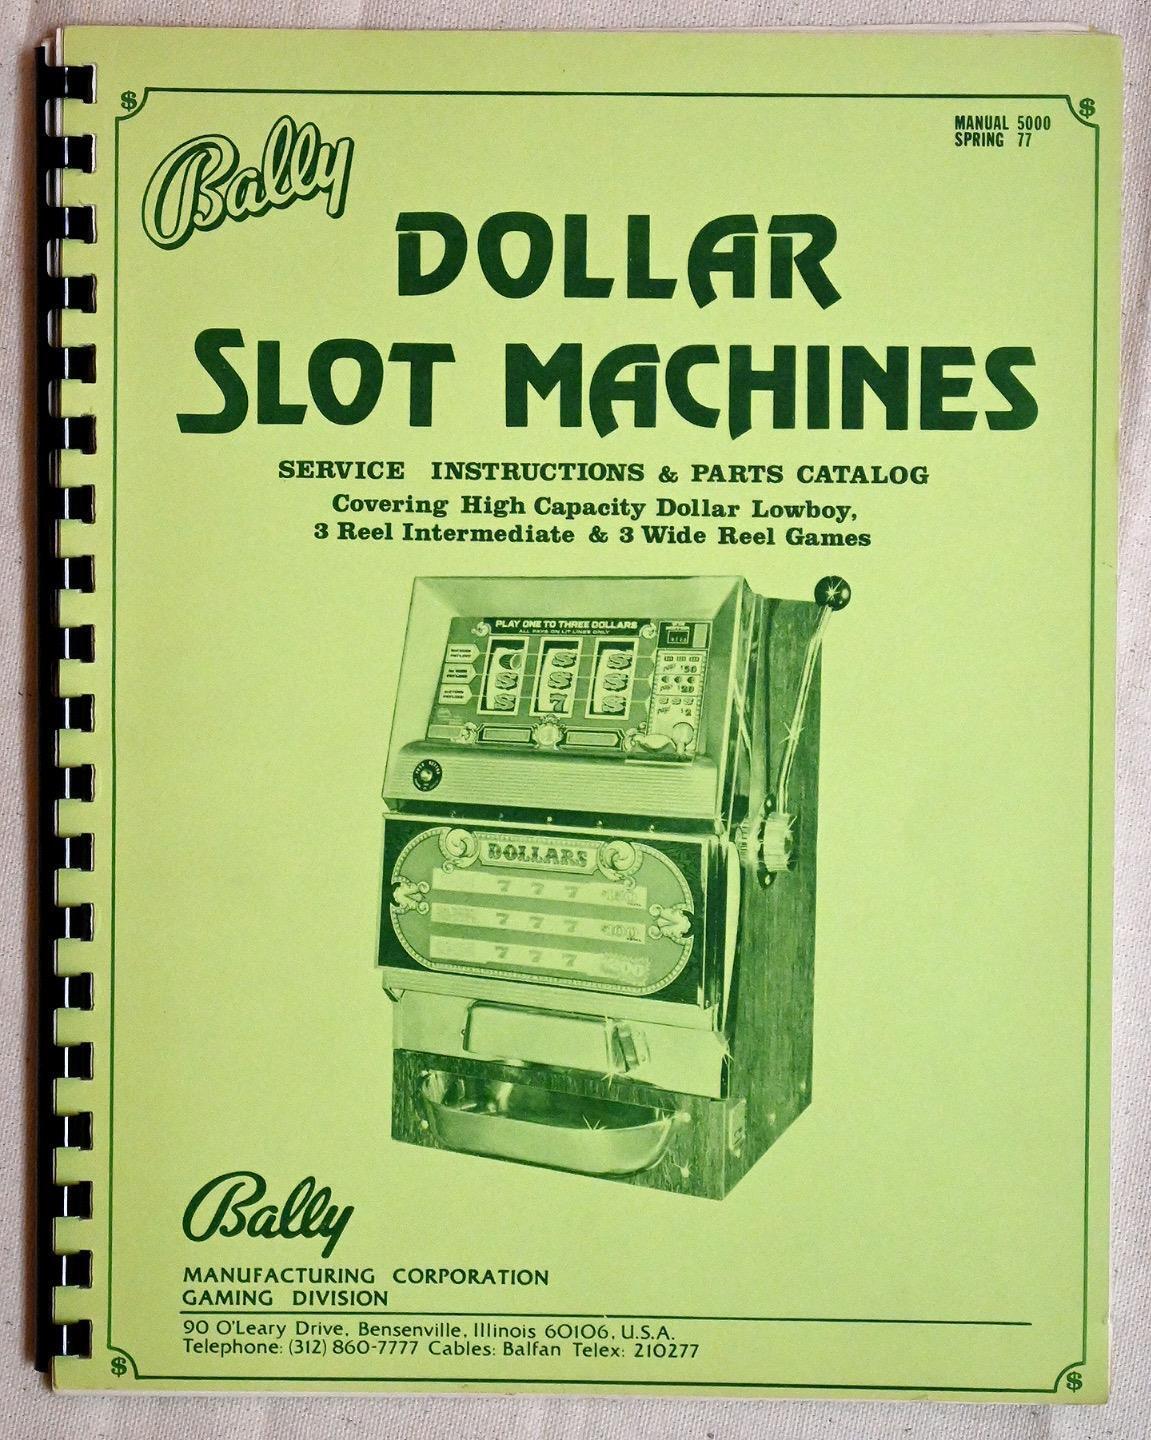 Bally Dollar Slot Machine Service & Parts Catalog #5000, 1977